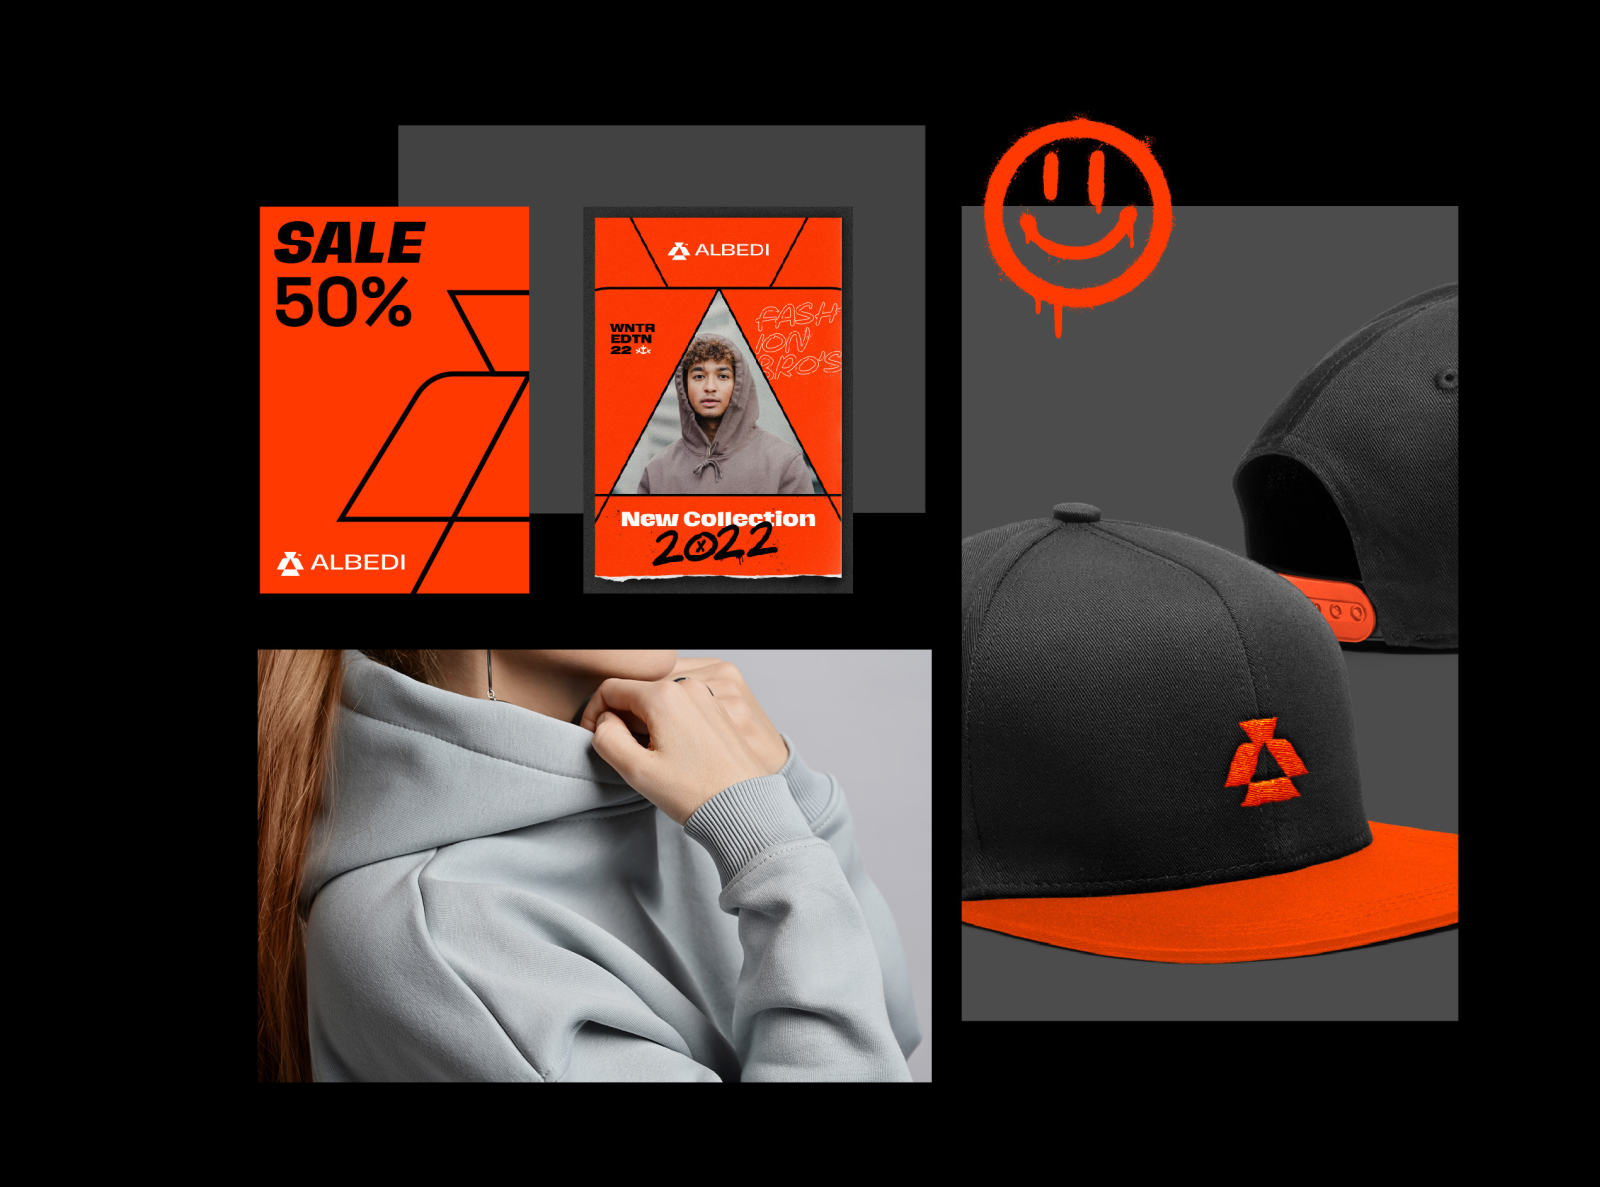 Speedy™ - Brand design by Abdullah Hasani for Honedon on Dribbble